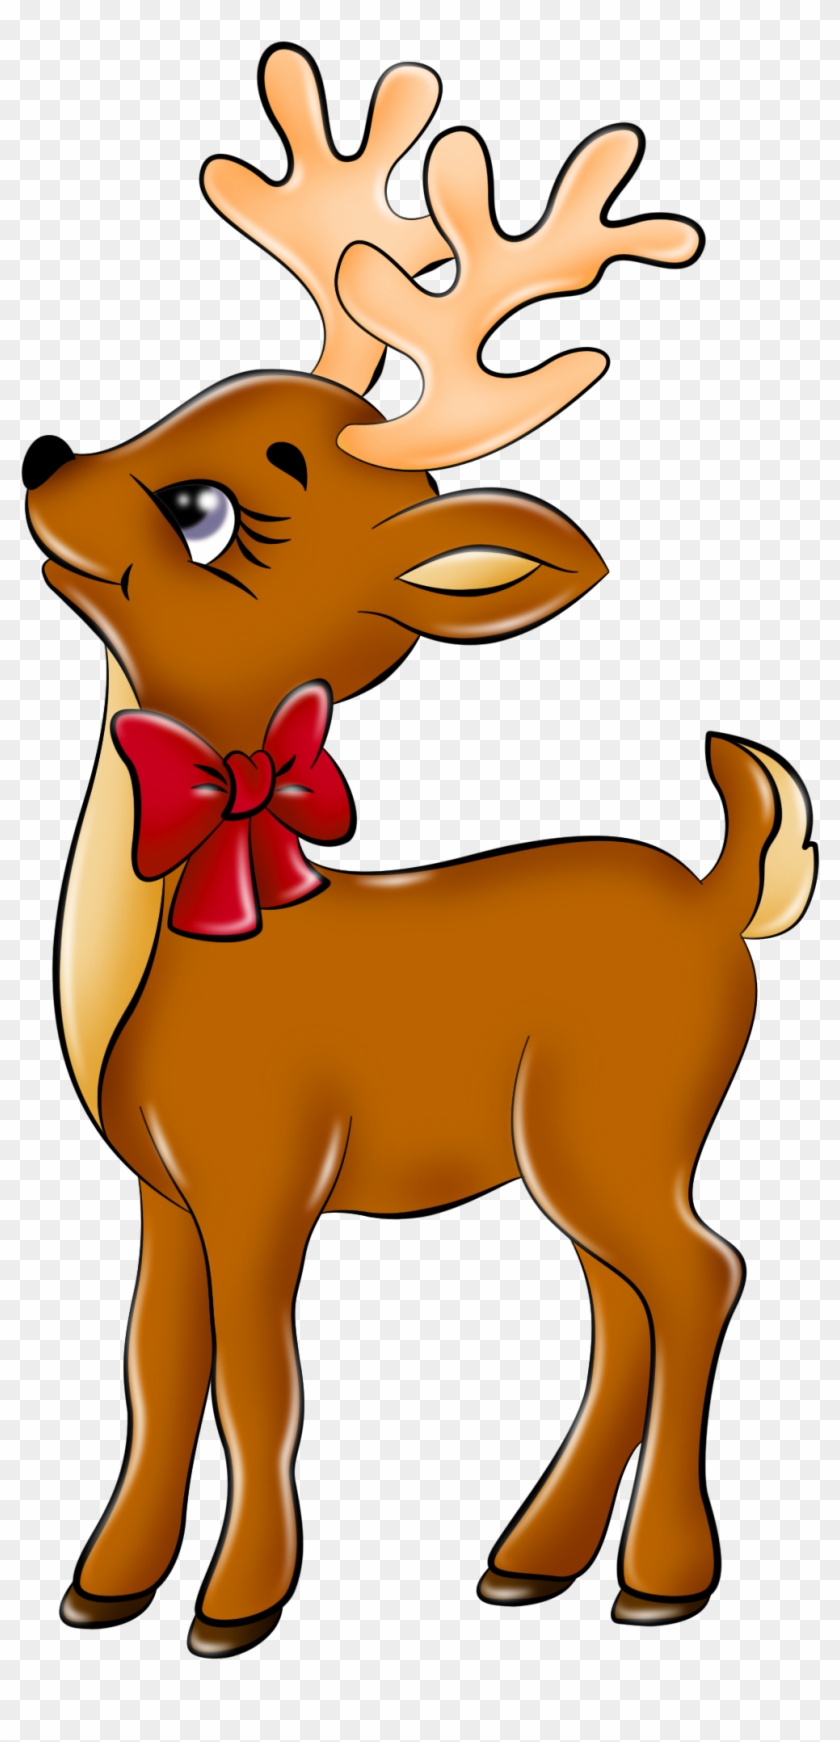 Wildlife - Cartoon Reindeer - Free Transparent PNG Clipart Images Download